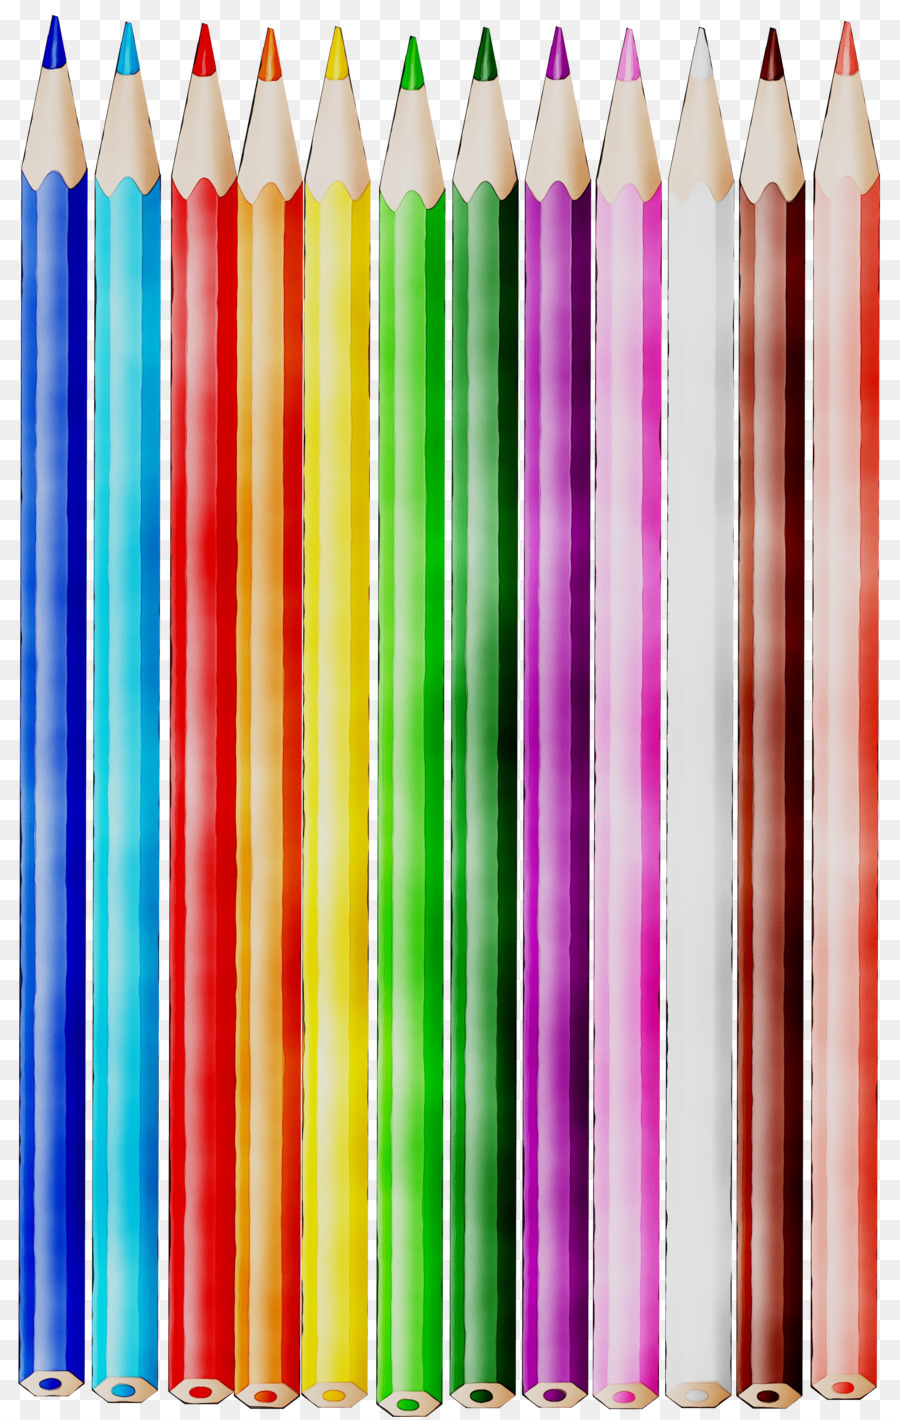 Crayon Pencil Product -  png download - 4381*6899 - Free Transparent Crayon png Download.